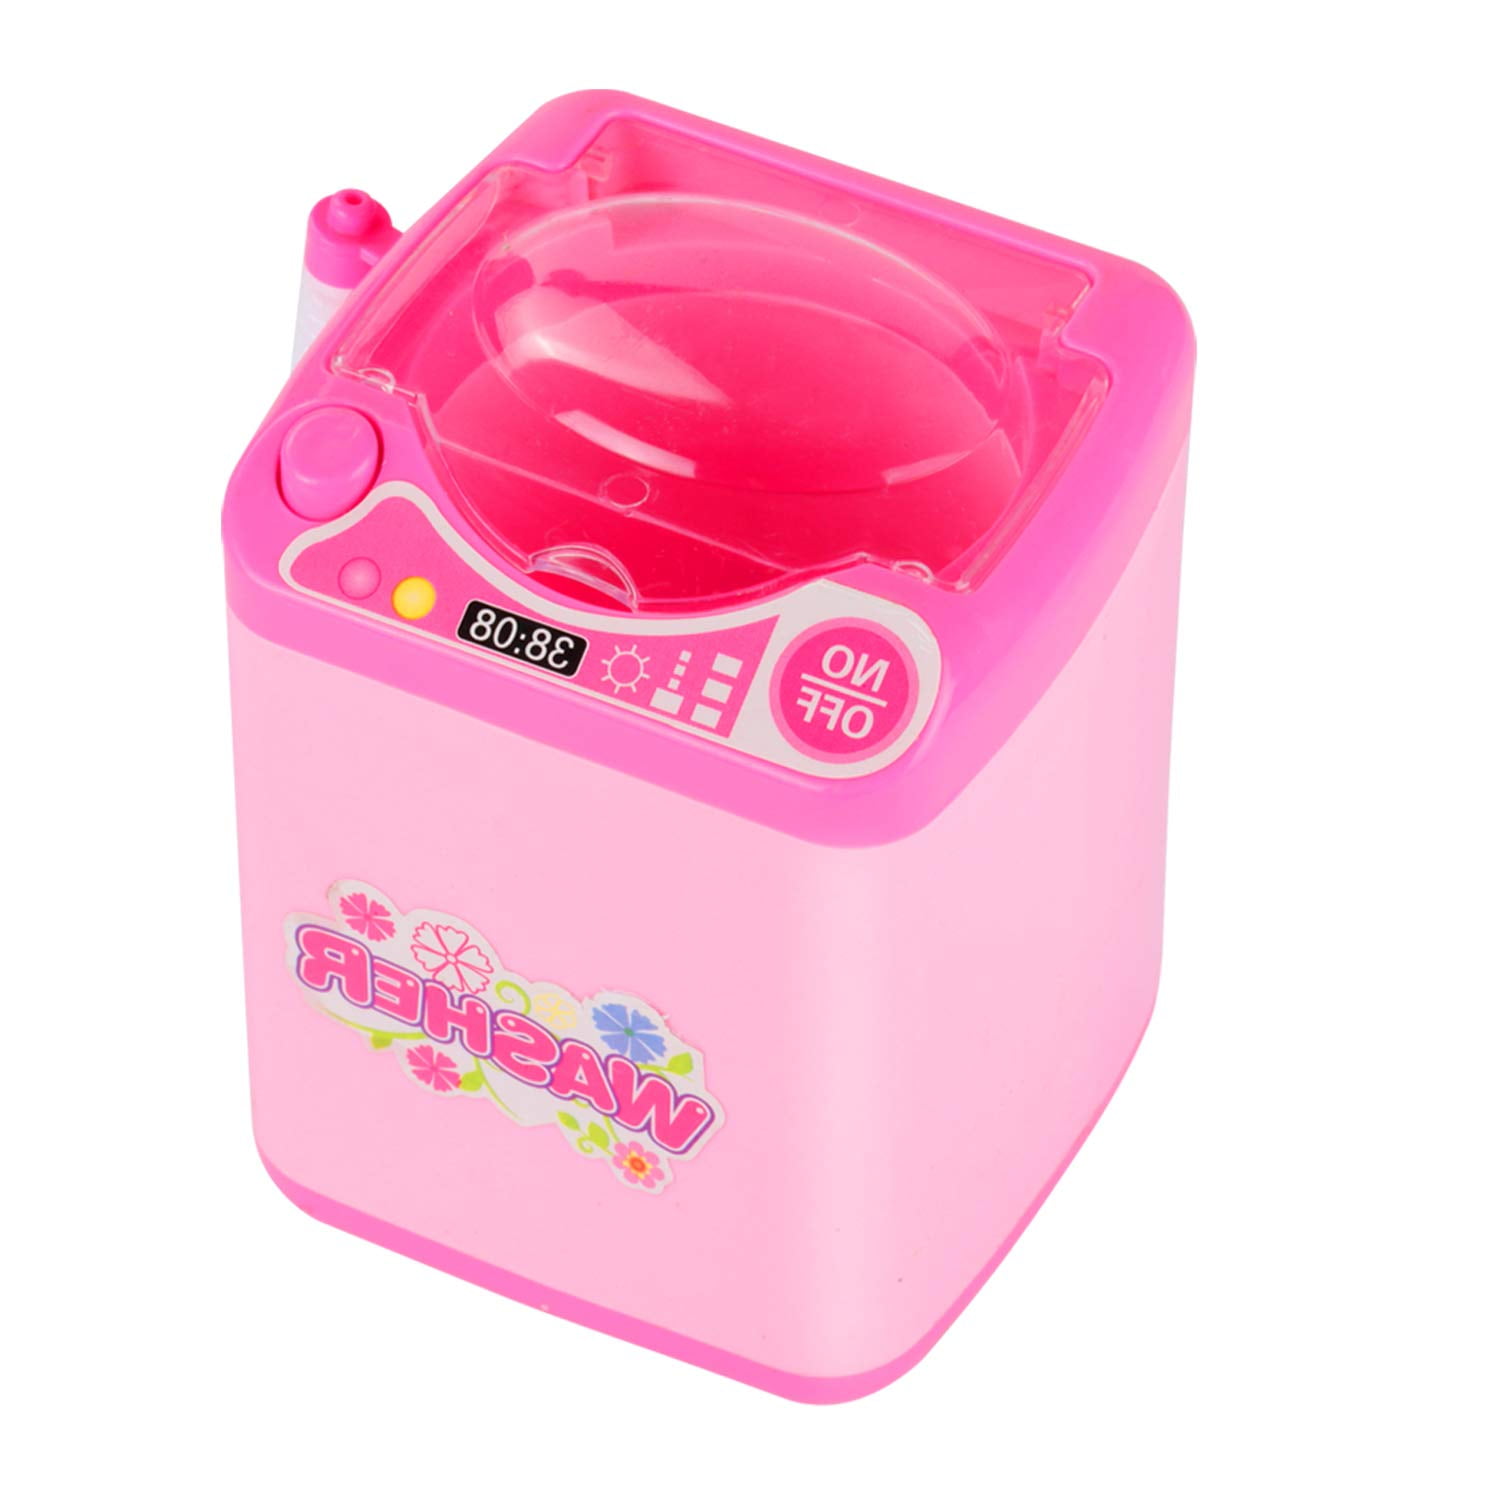 mini washer toy